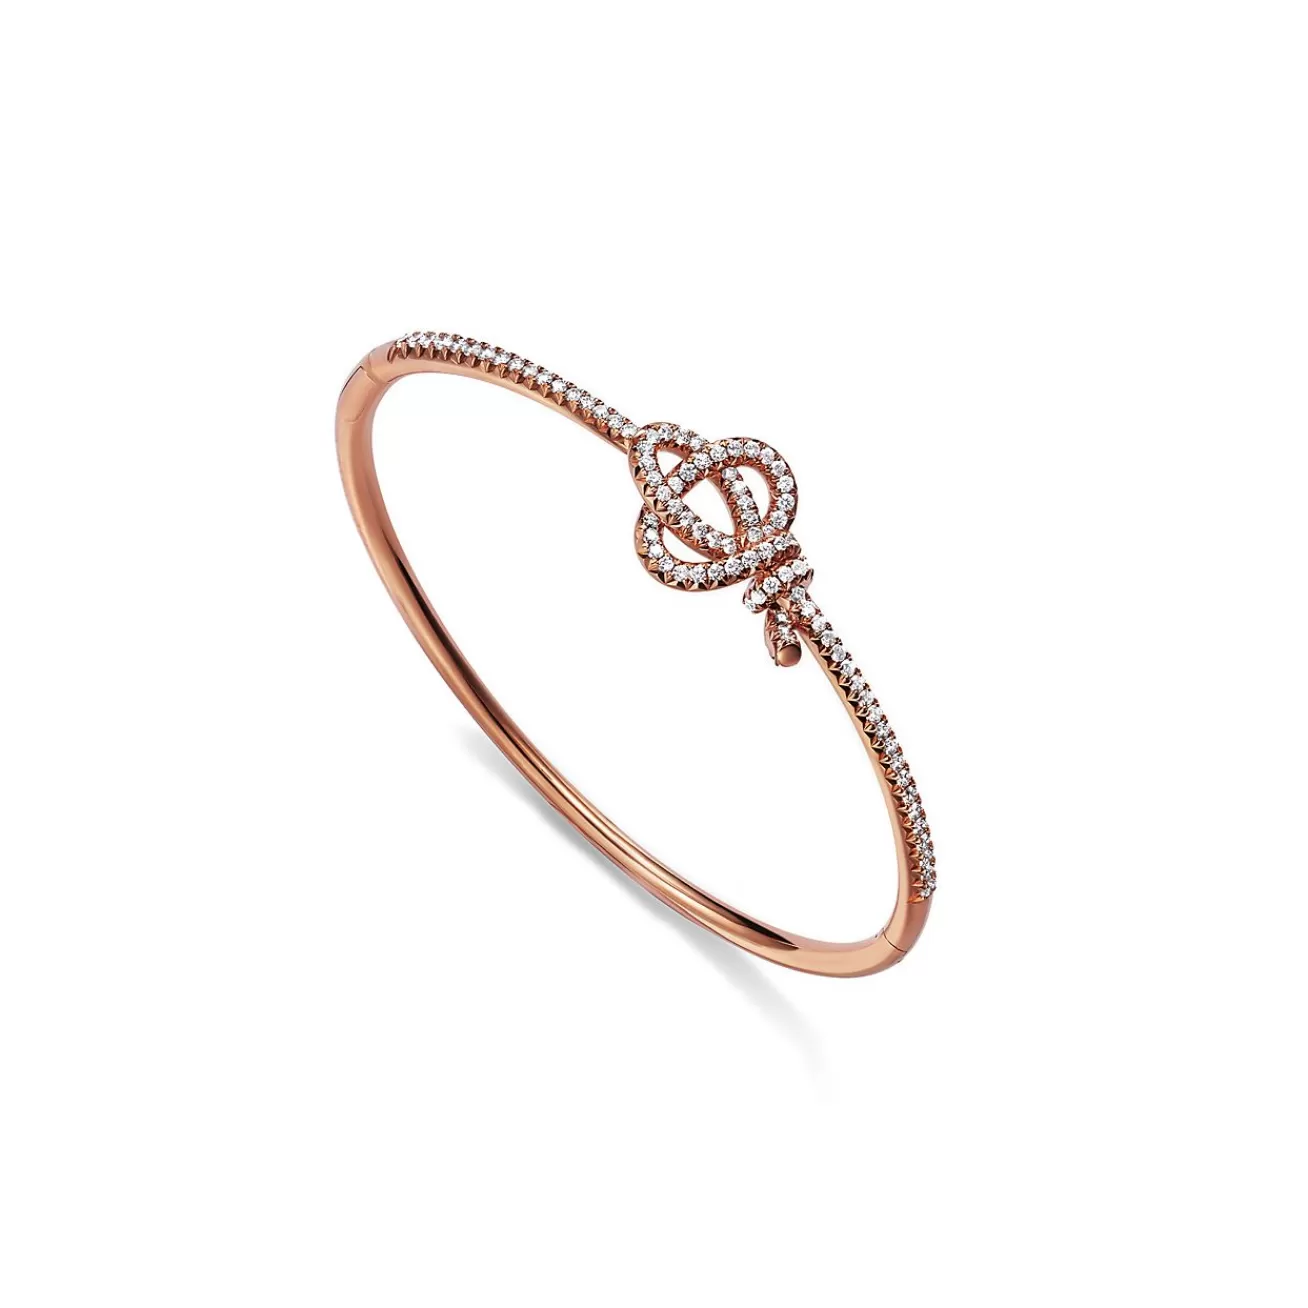 Tiffany & Co. Tiffany Keys Woven Keys Hinged Bracelet in Rose Gold with Diamonds | ^ Bracelets | New Jewelry